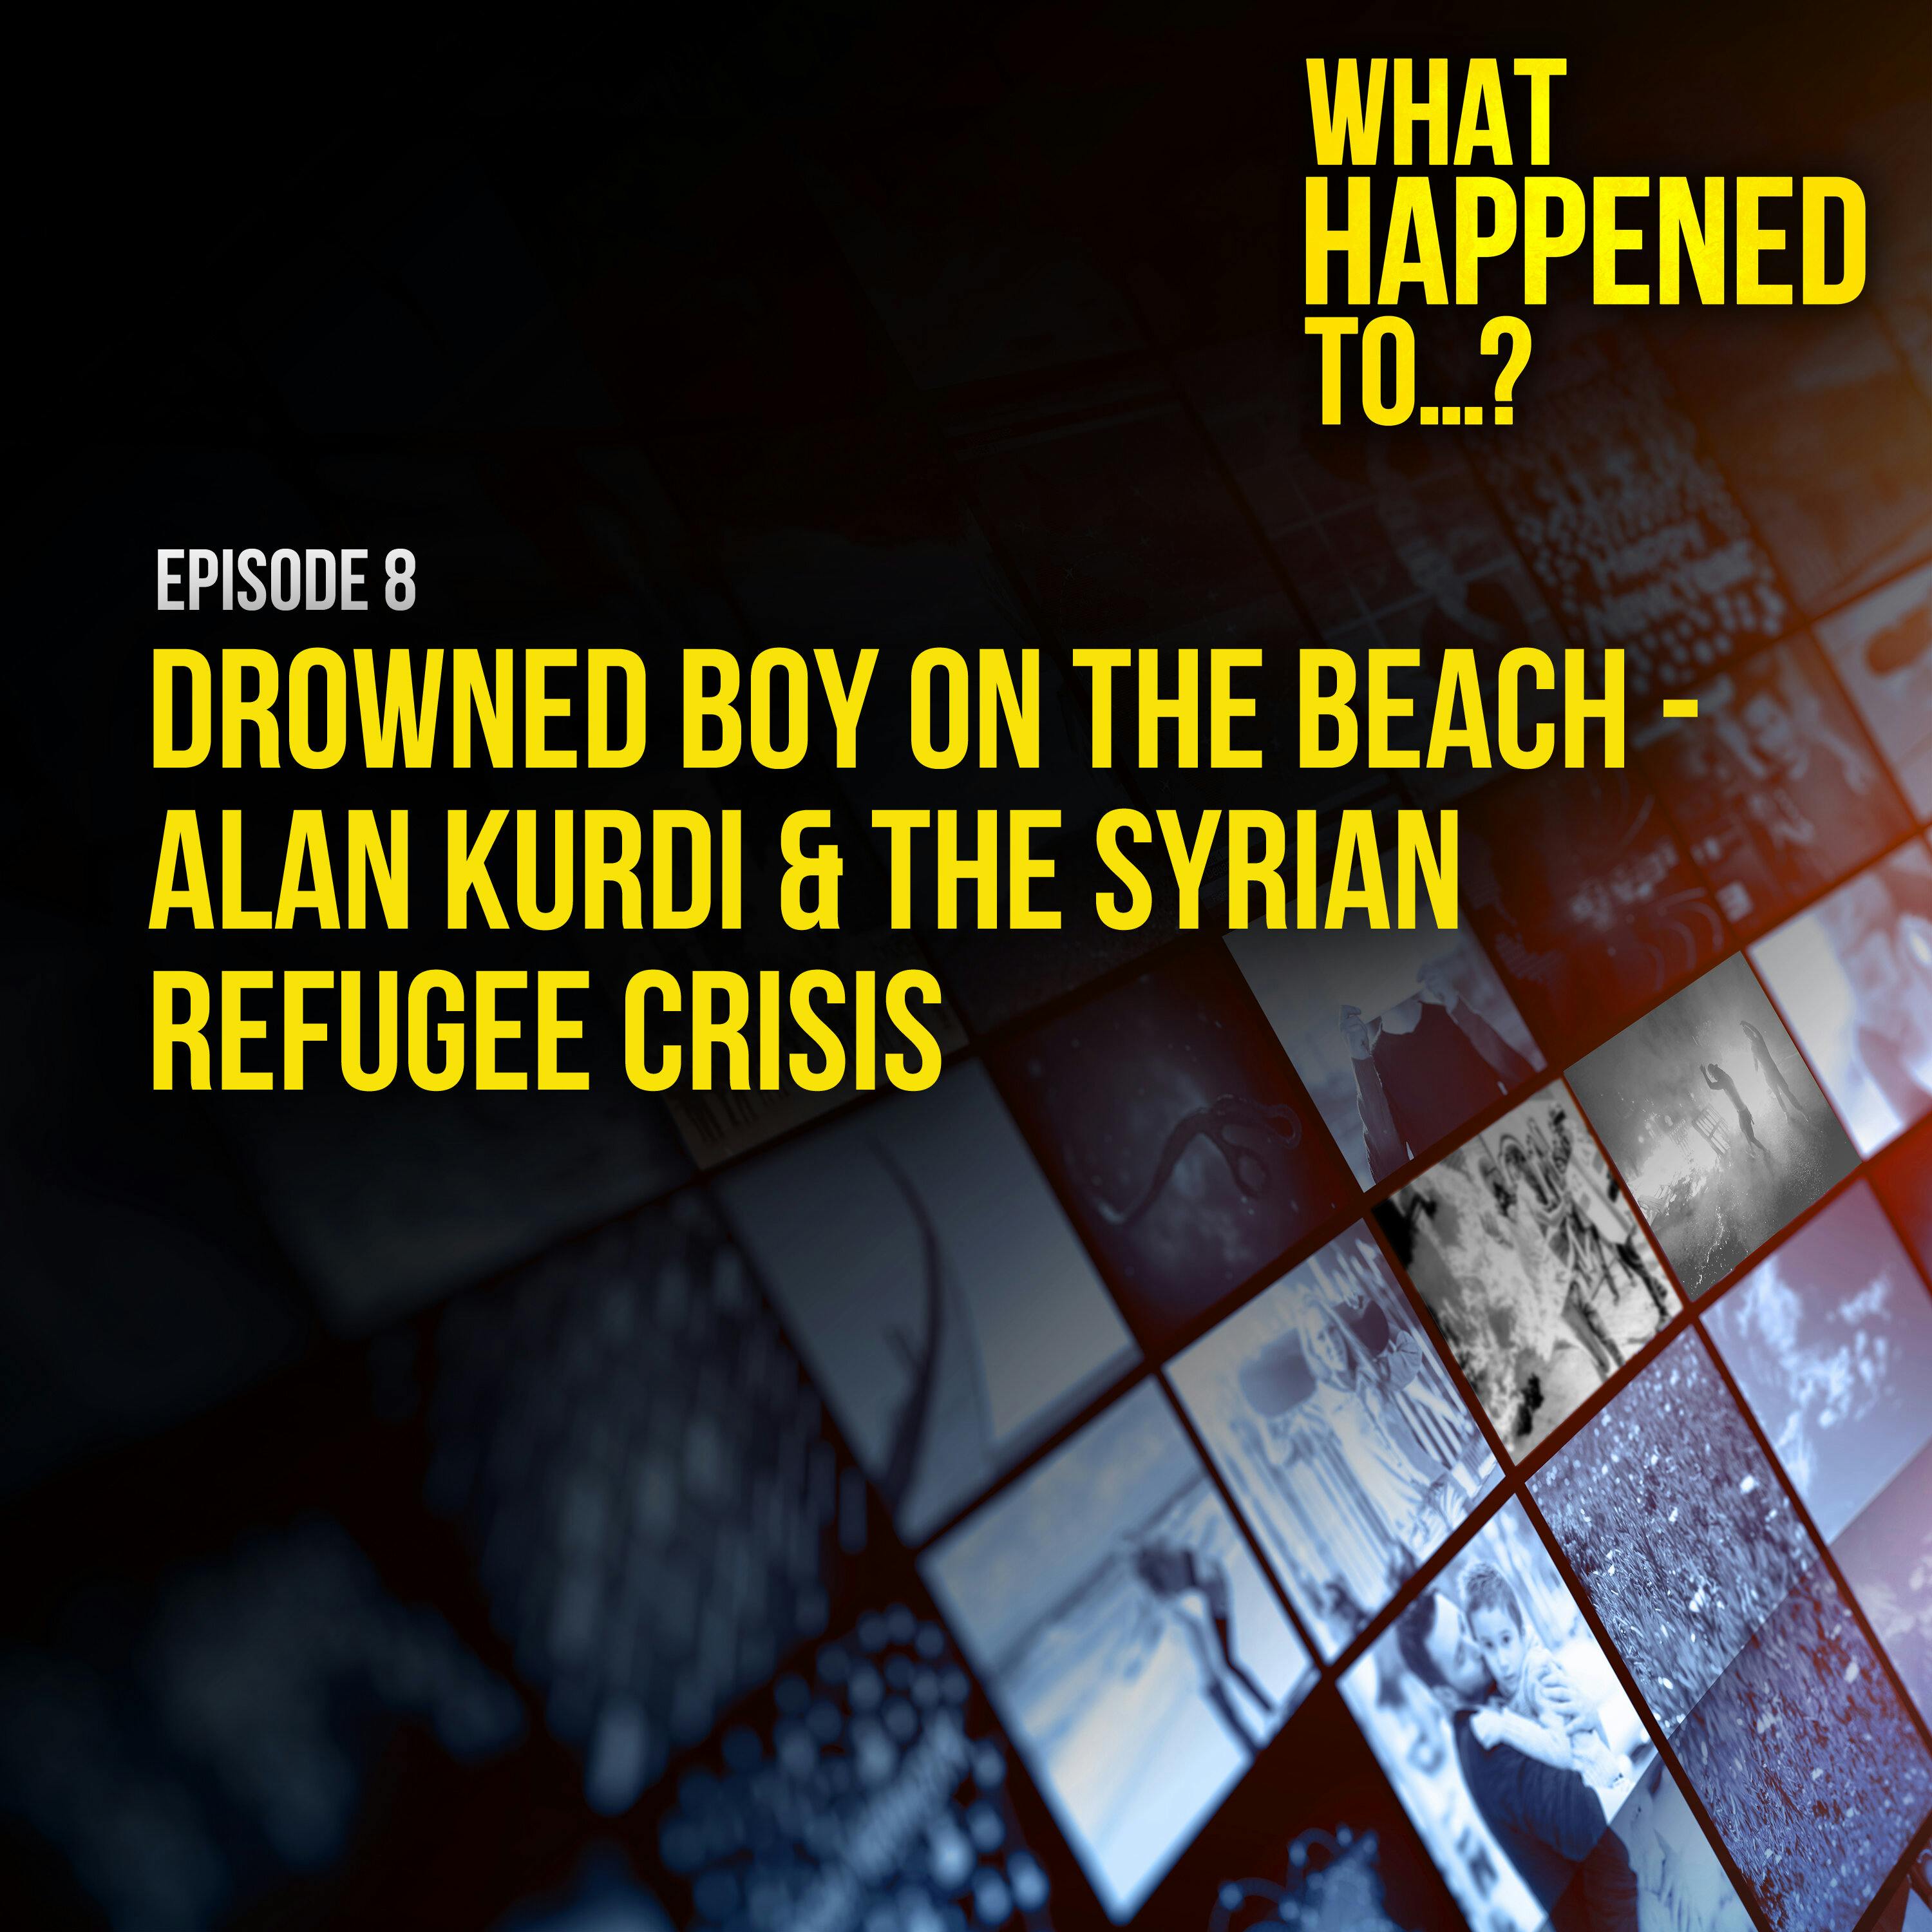 Drowned boy on the beach - Alan Kurdi & the Syrian refugee crisis Part 1